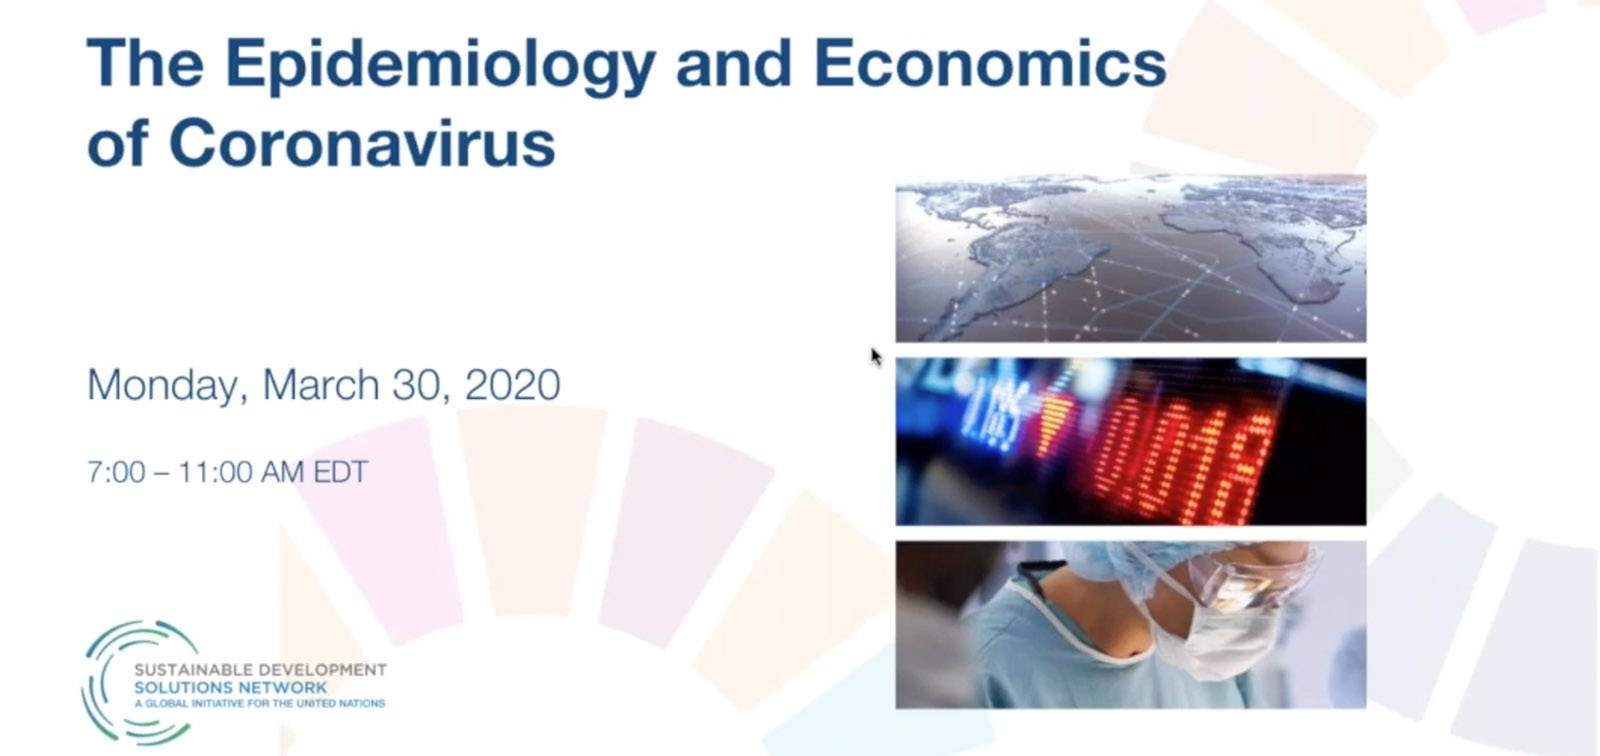 The Epidemiology and Economics of Coronavirus